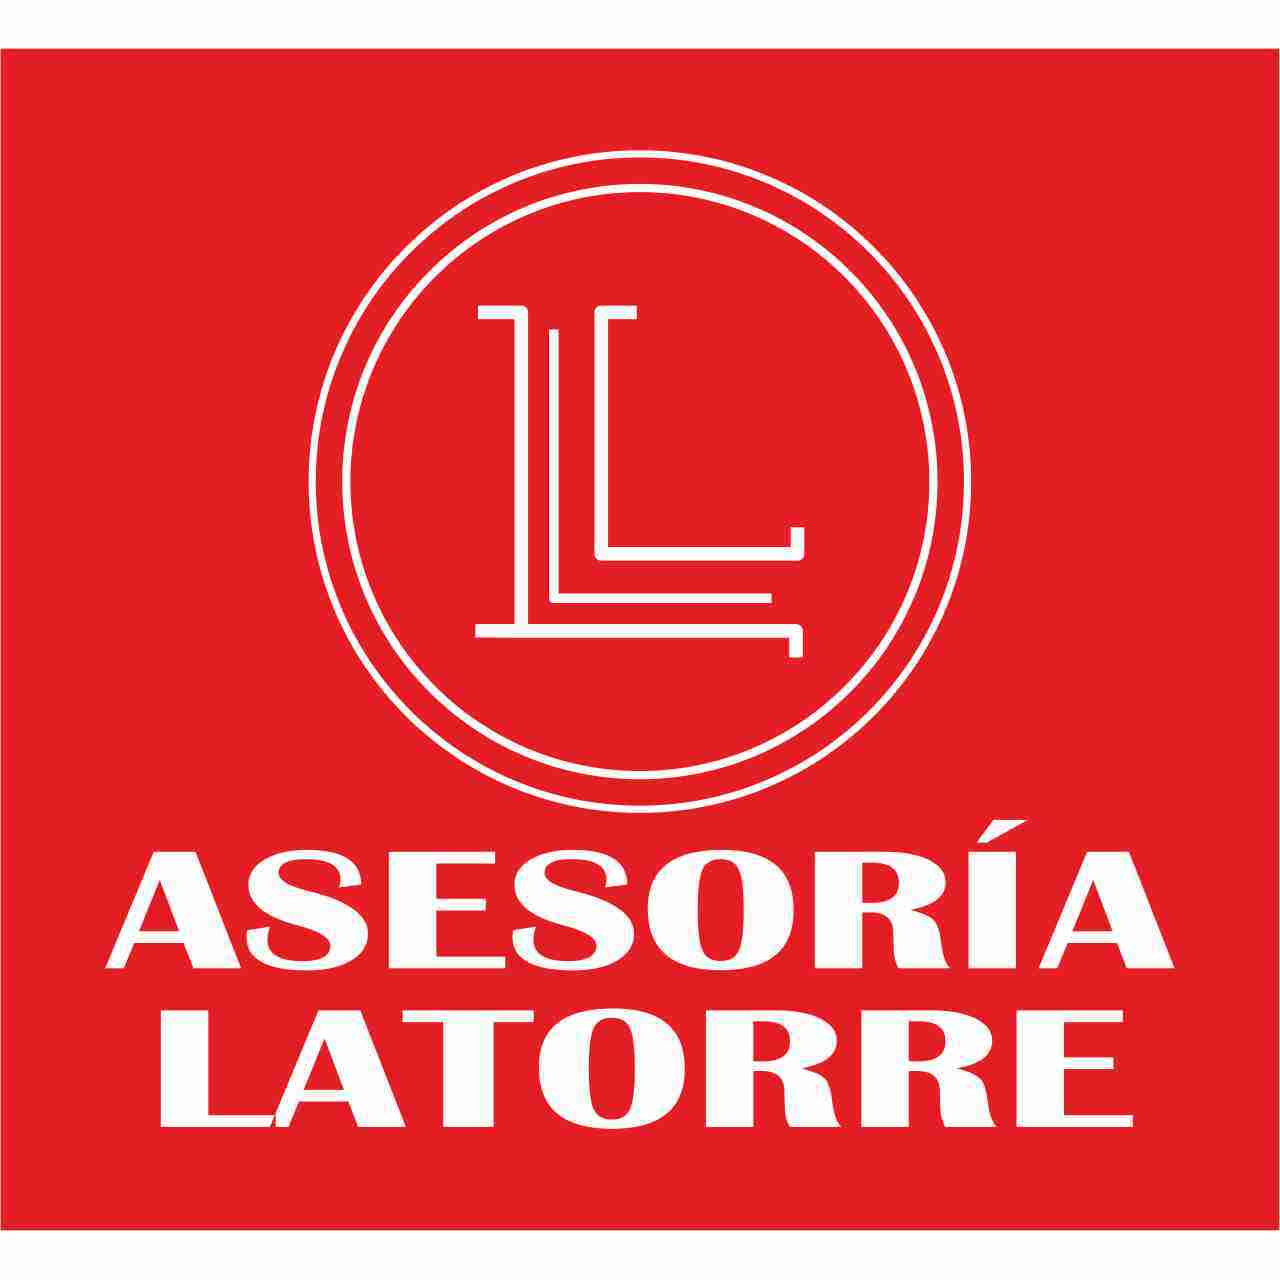 Asesoría Latorre Canet d'En Berenguer